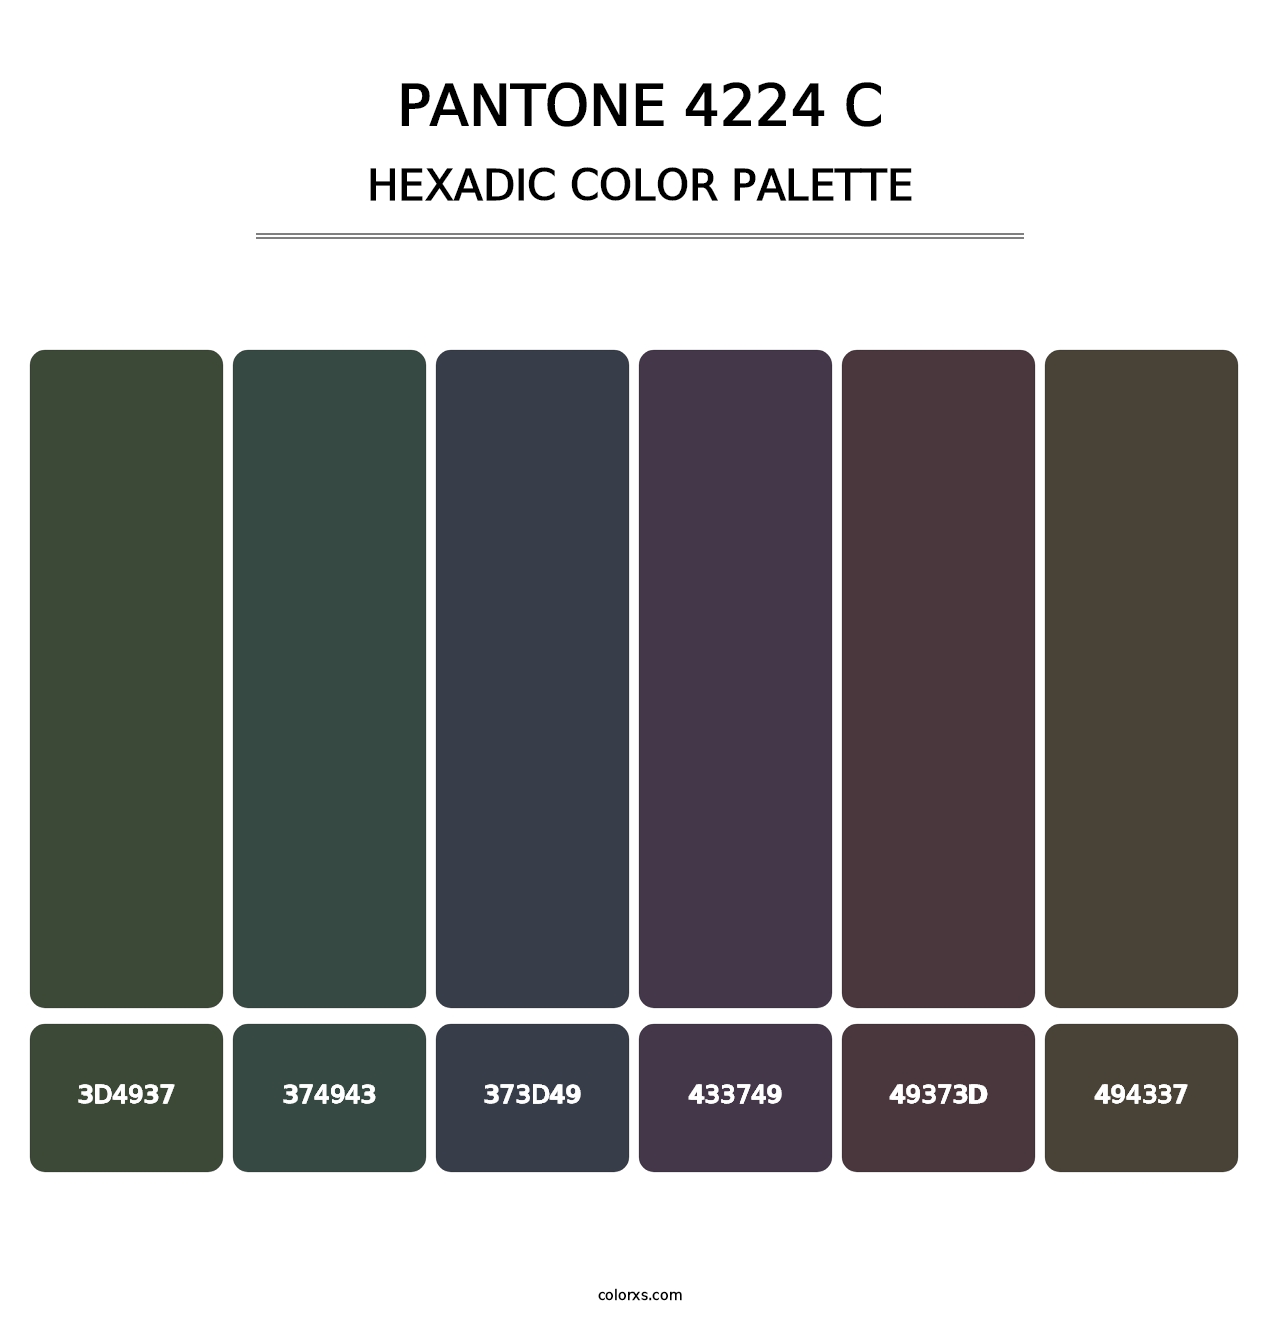 PANTONE 4224 C - Hexadic Color Palette